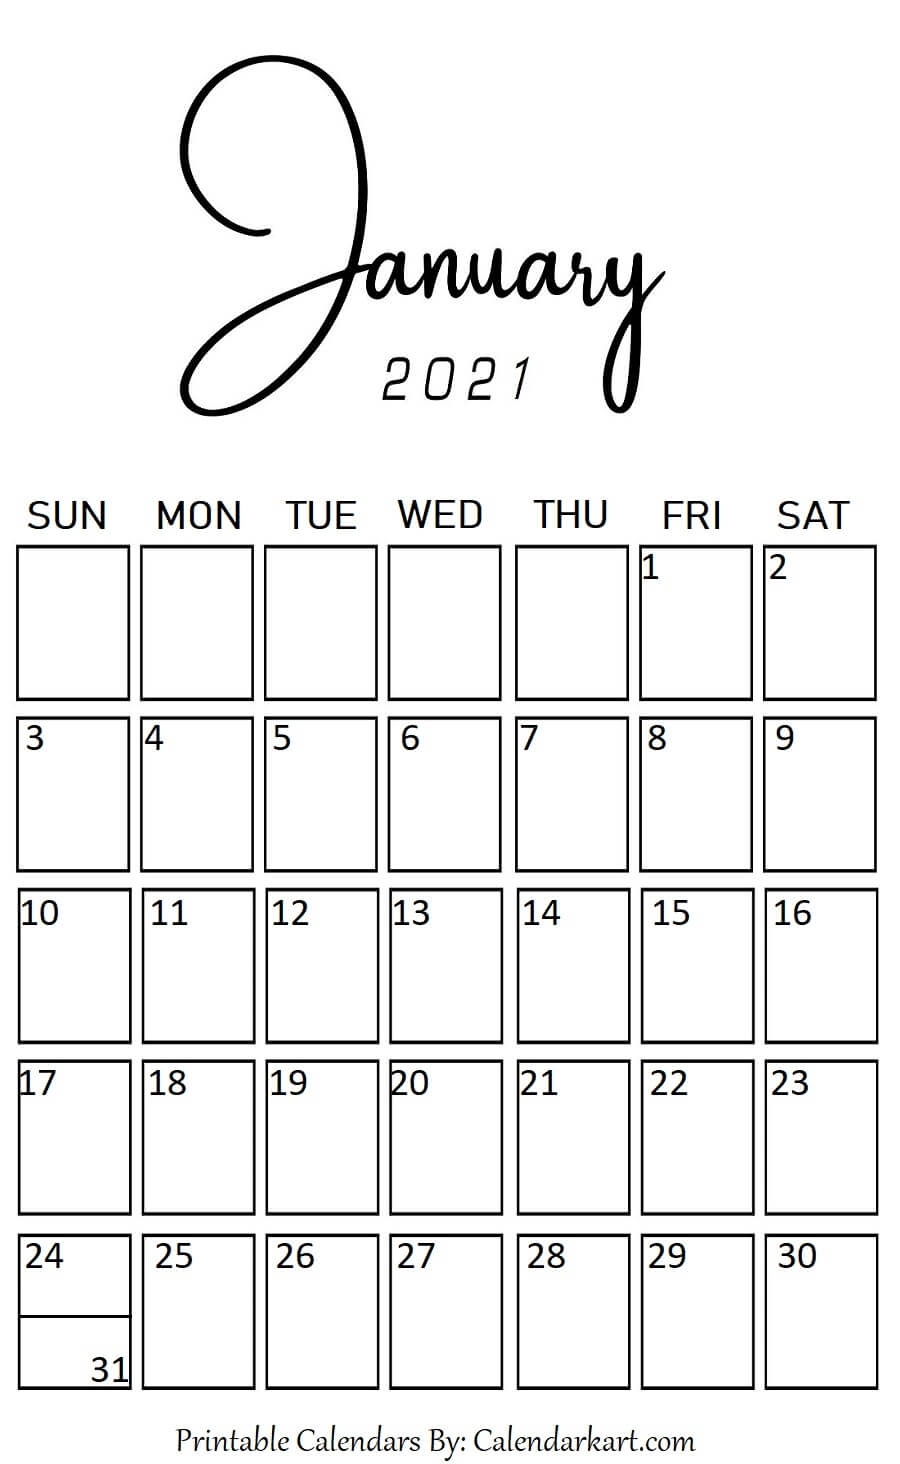 7 Cute And Stylish Free Printable January 2021 Calendar